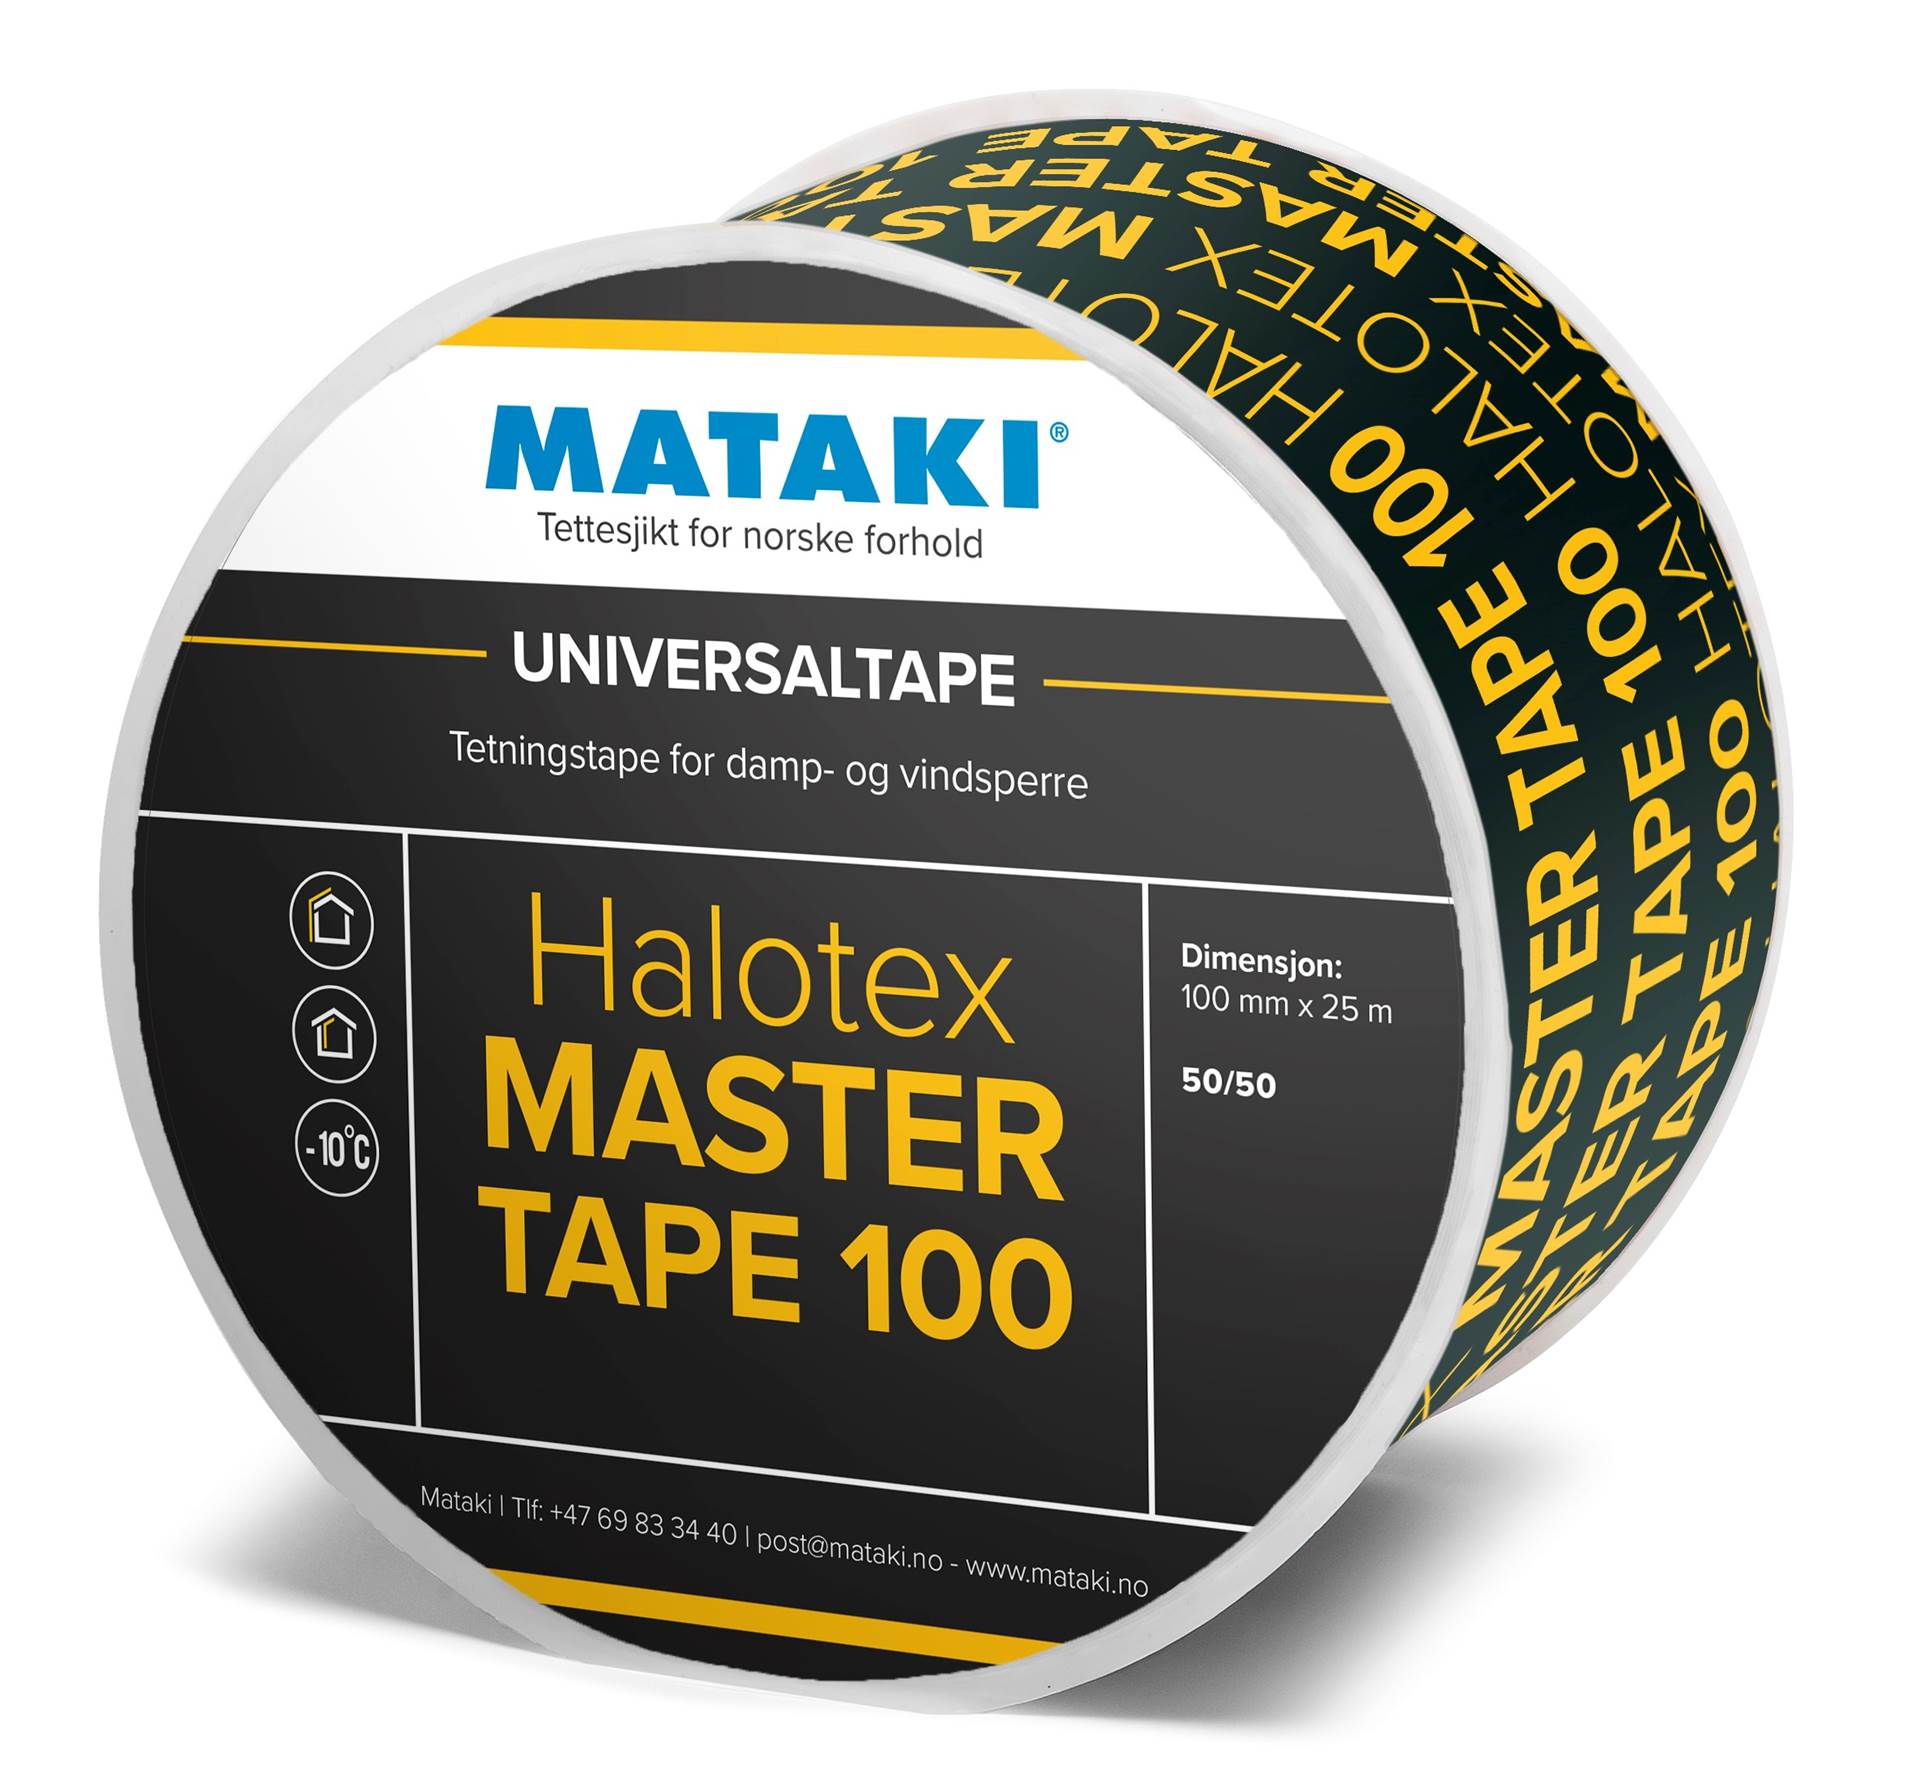 PB_Master tape 100_740037